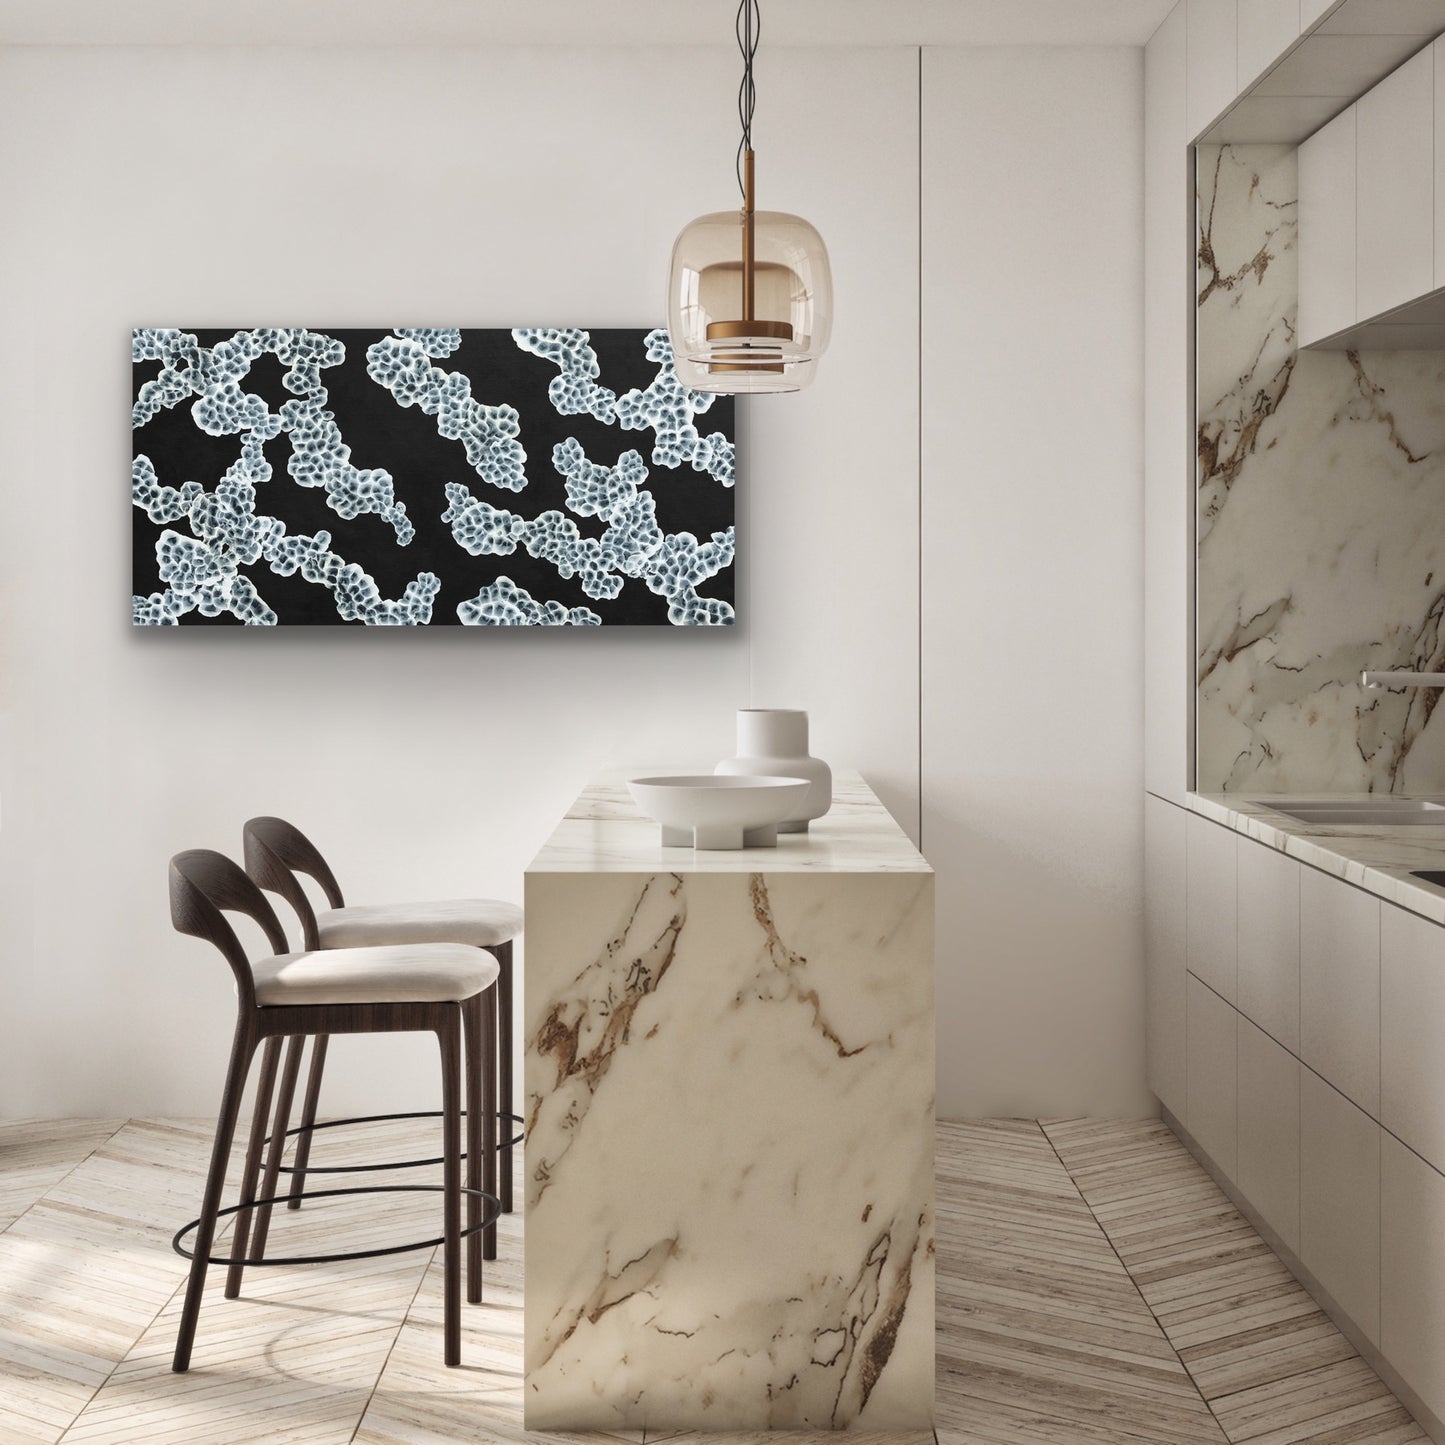 Aqueous Bloom Rock Pool Musings VI - Large Abstract Sealife Painting